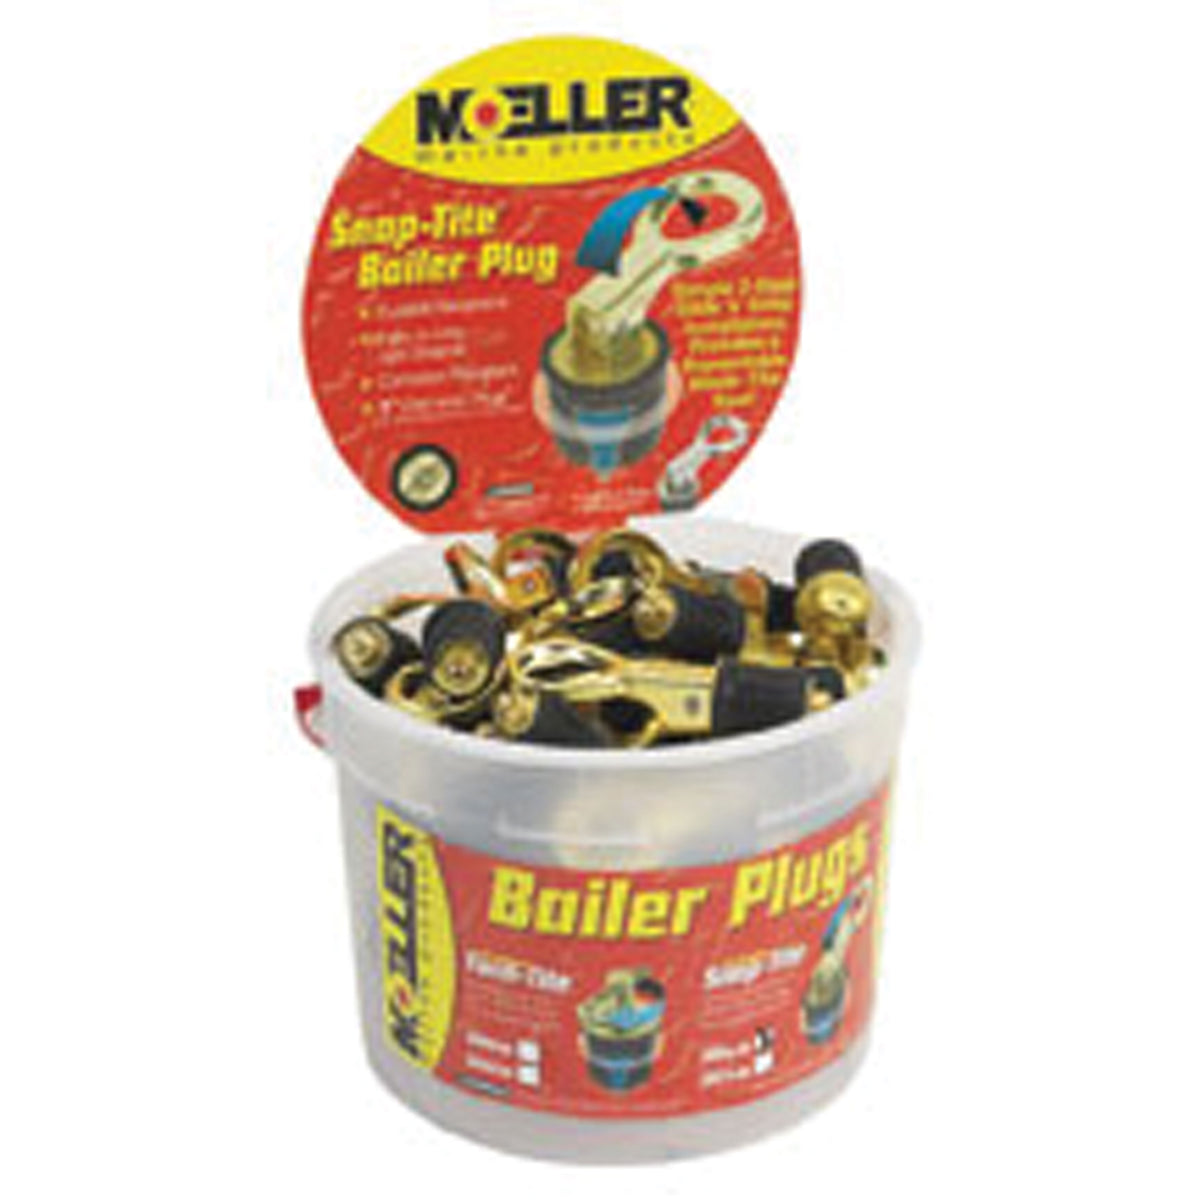 Moeller 029000-50 Snap-Tite Brass Bailer Plug - 1", 50 Piece Bucket